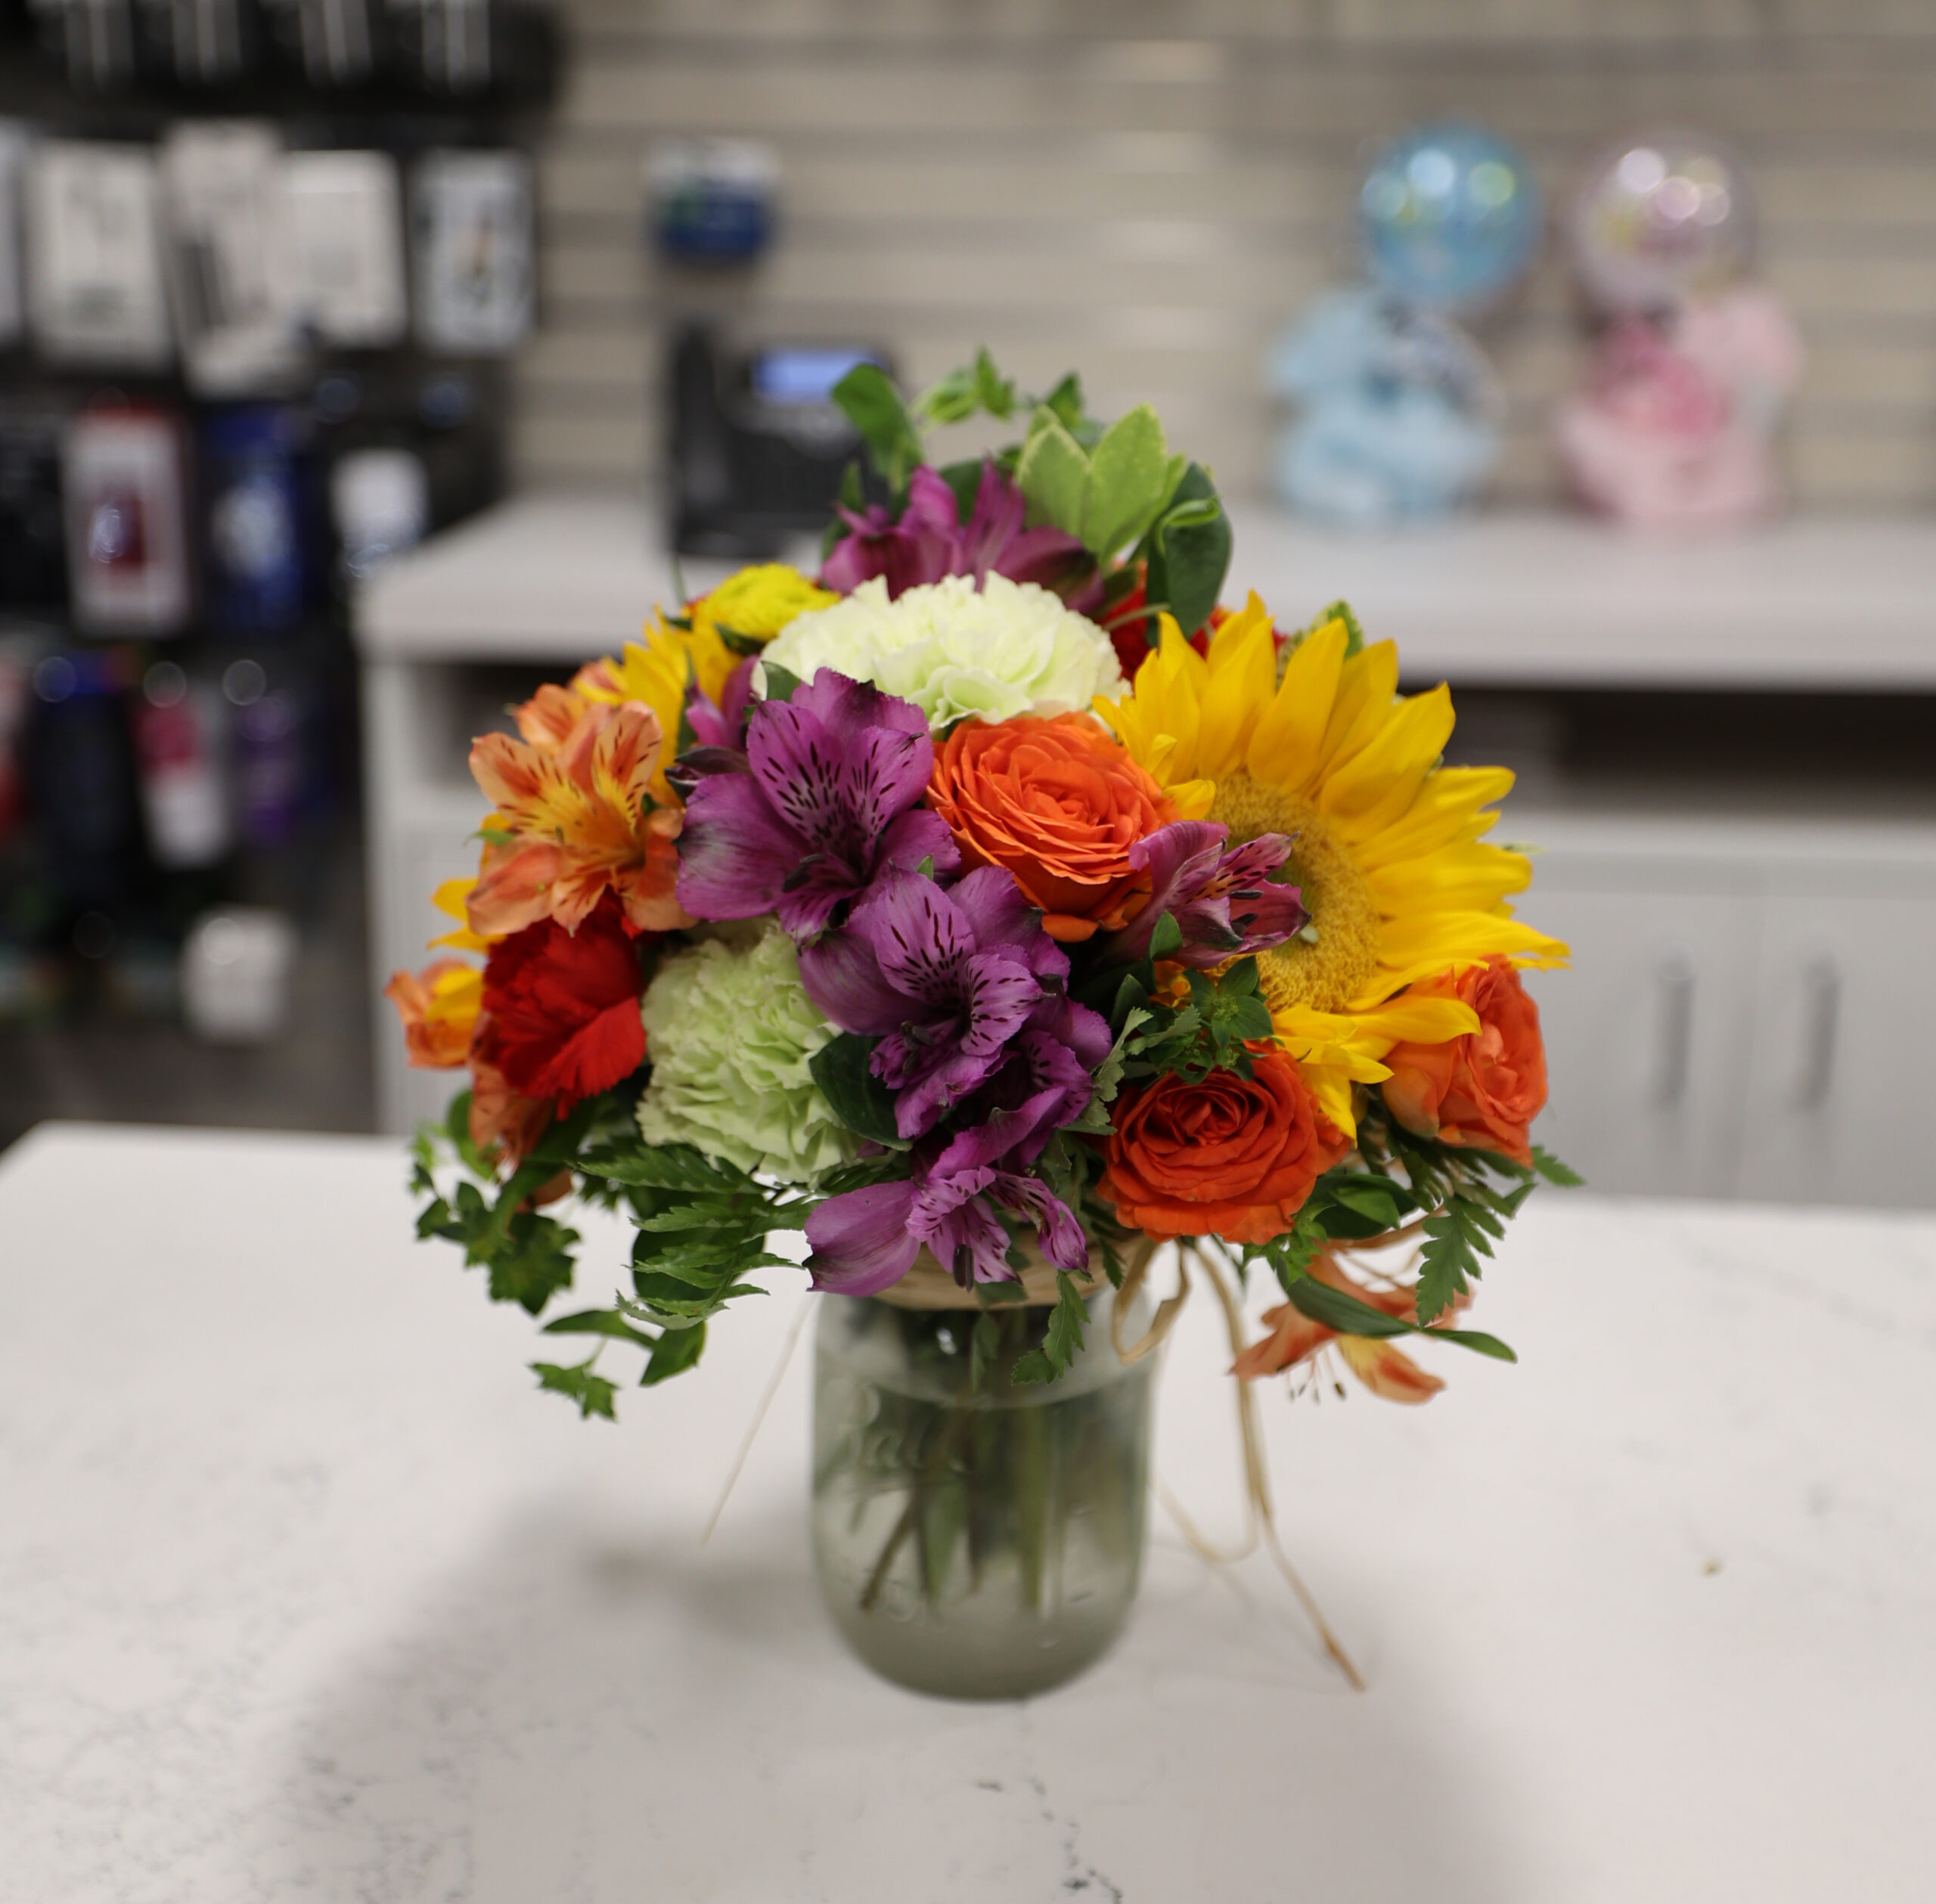 Cloverkey Gift Shop at Medical City Arlington Hospital - Floral Arrangement